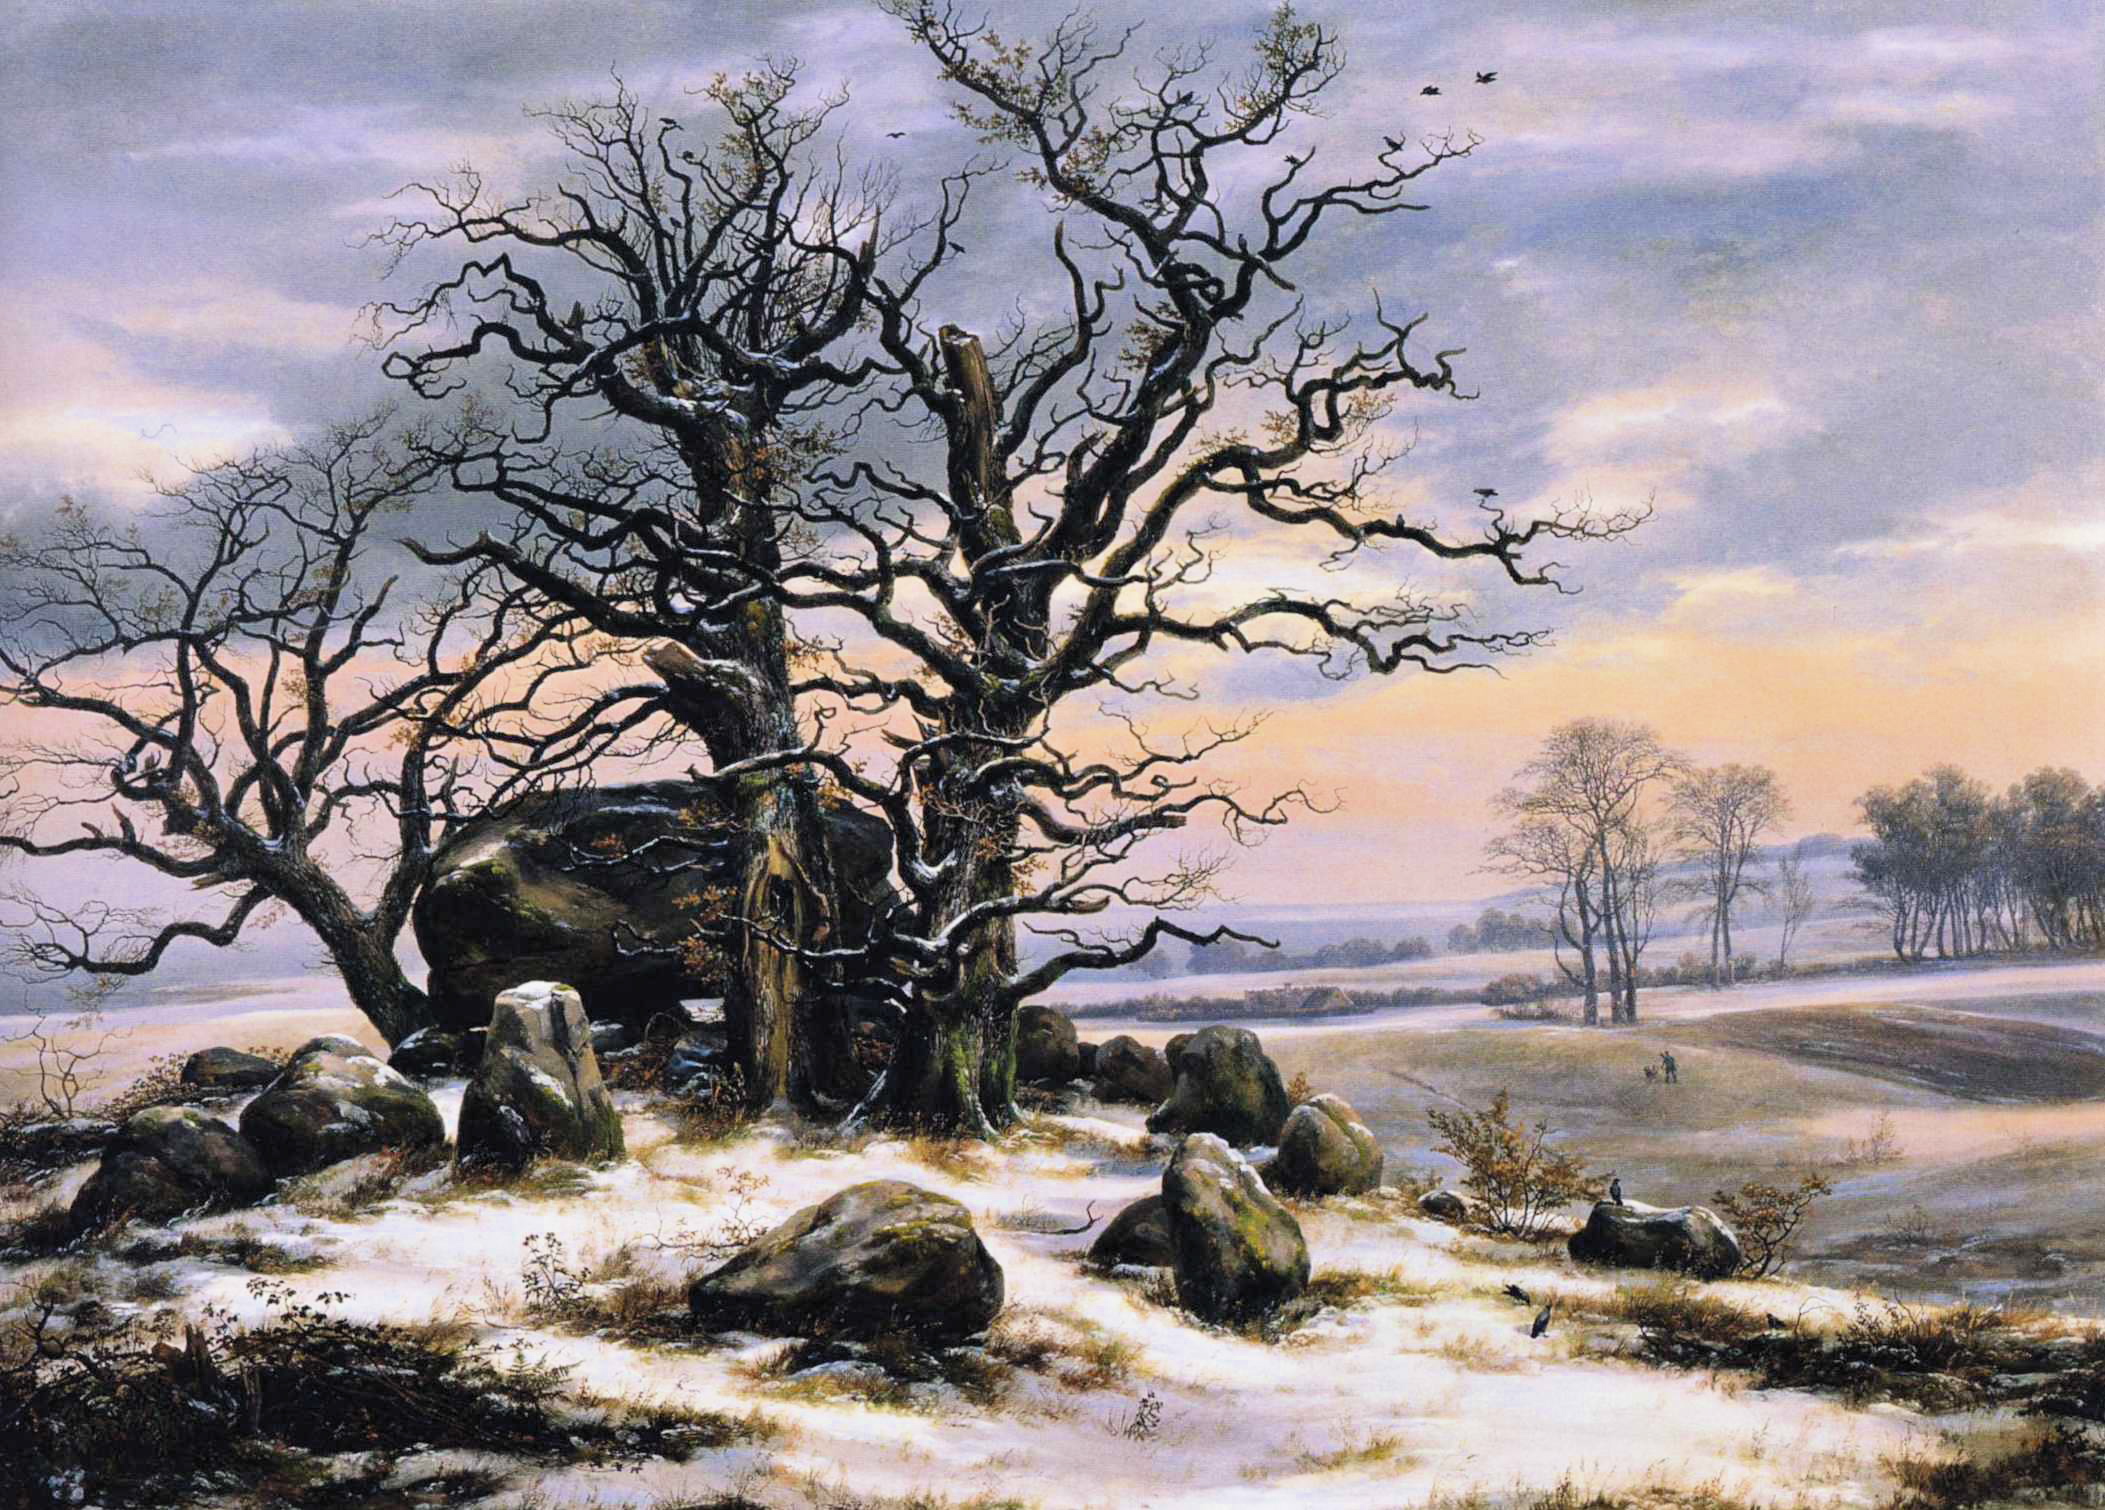 Johan Christian Dahl - Megalith Grave in Winter